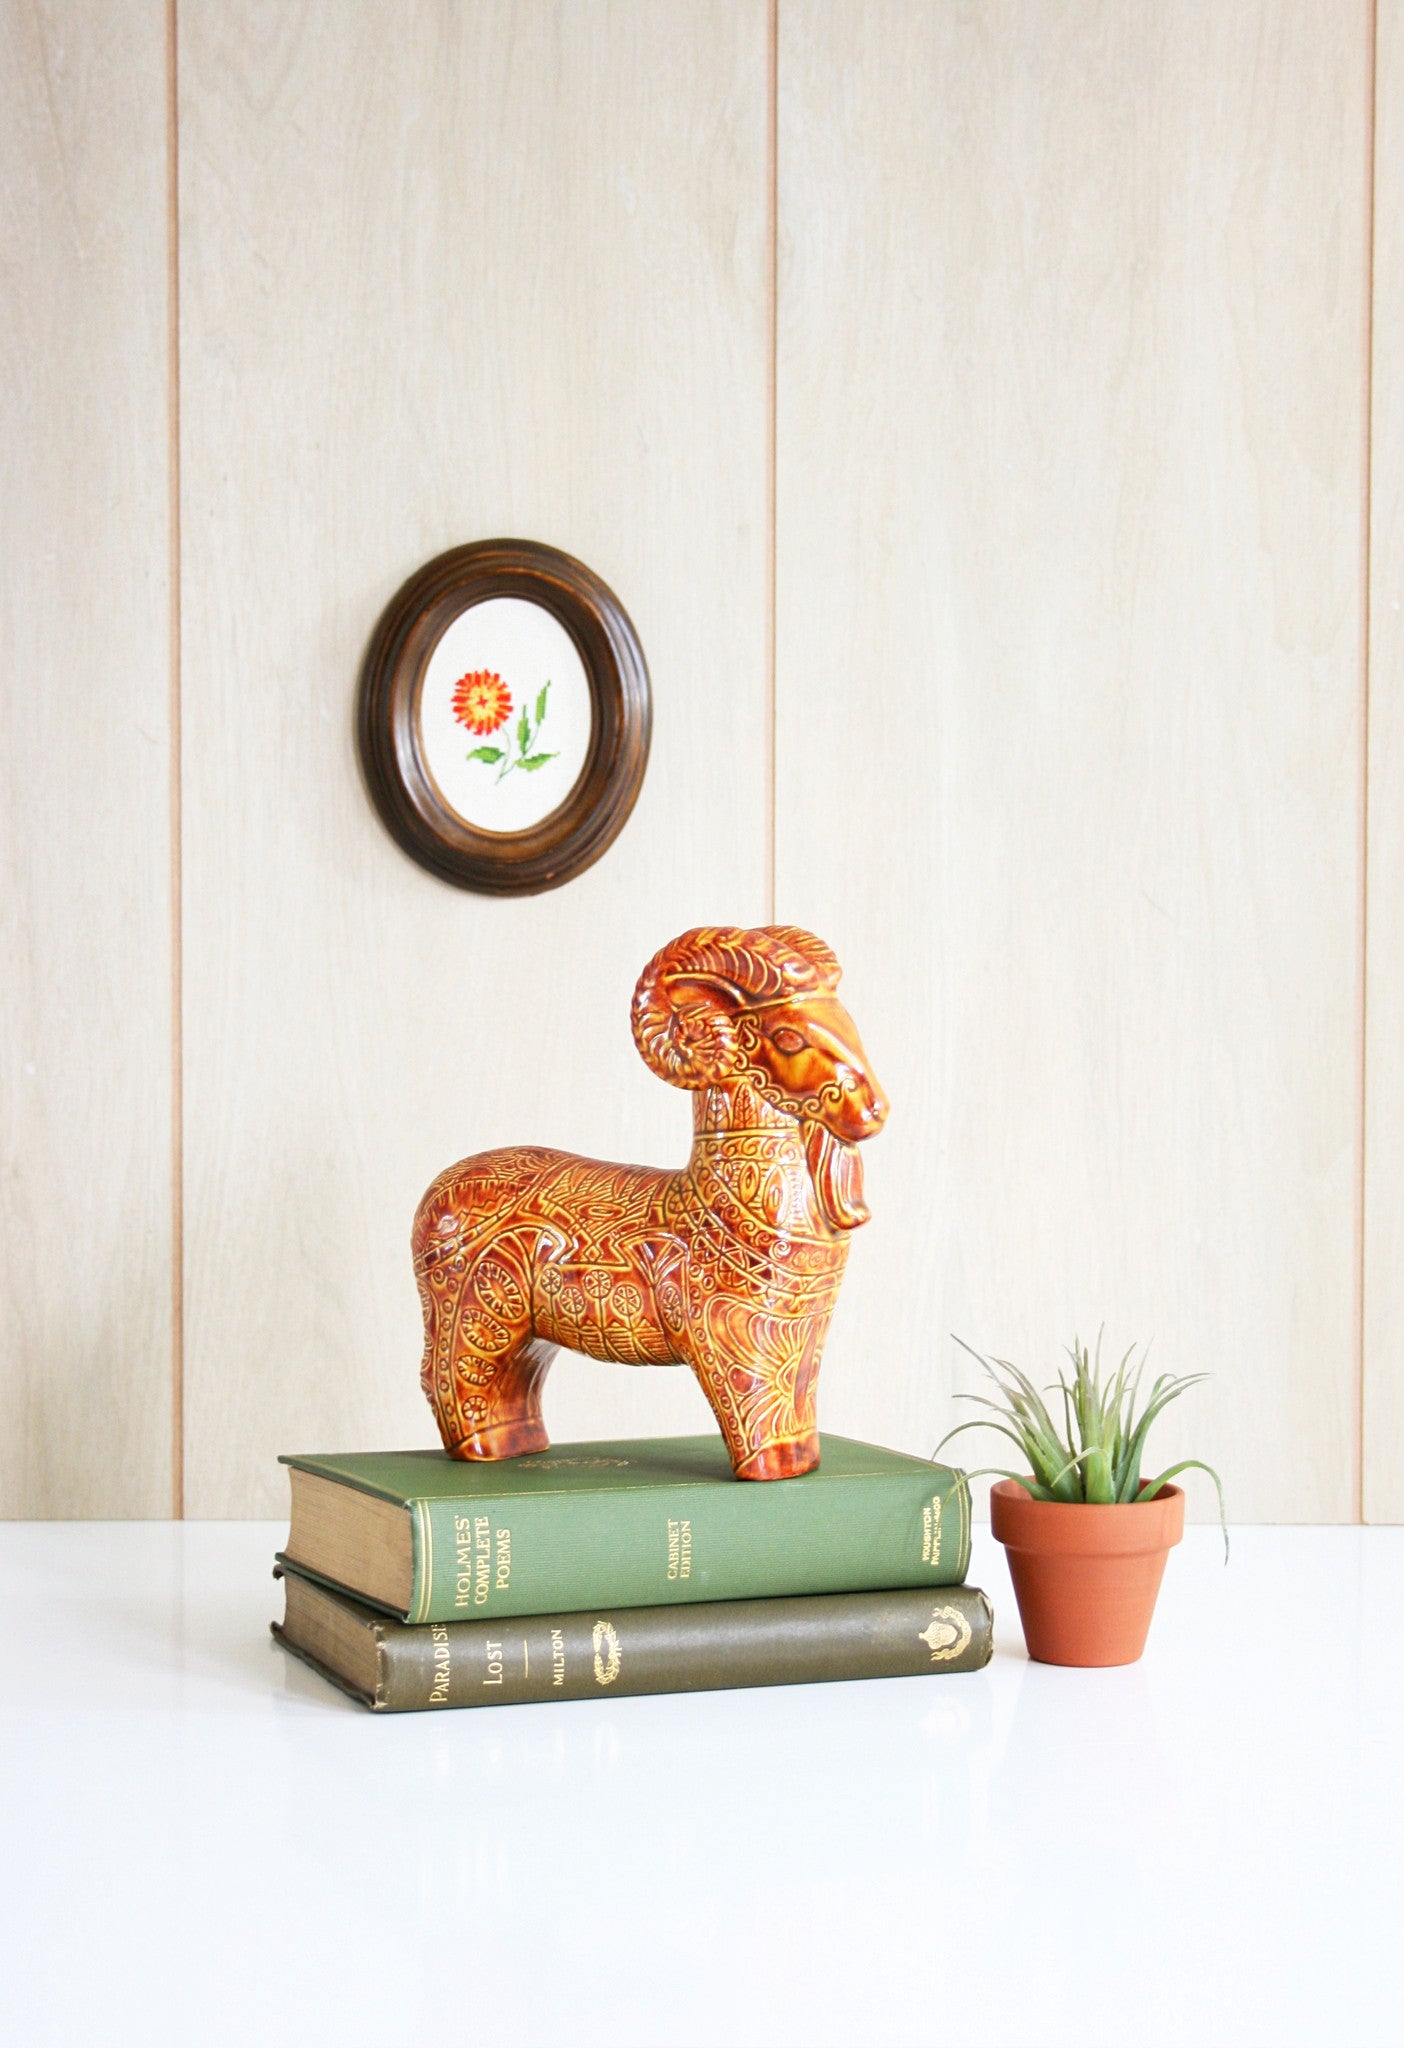 SOLD - Mid Century Modern Raymor Bitossi Inspired Ceramic Ram Figurine